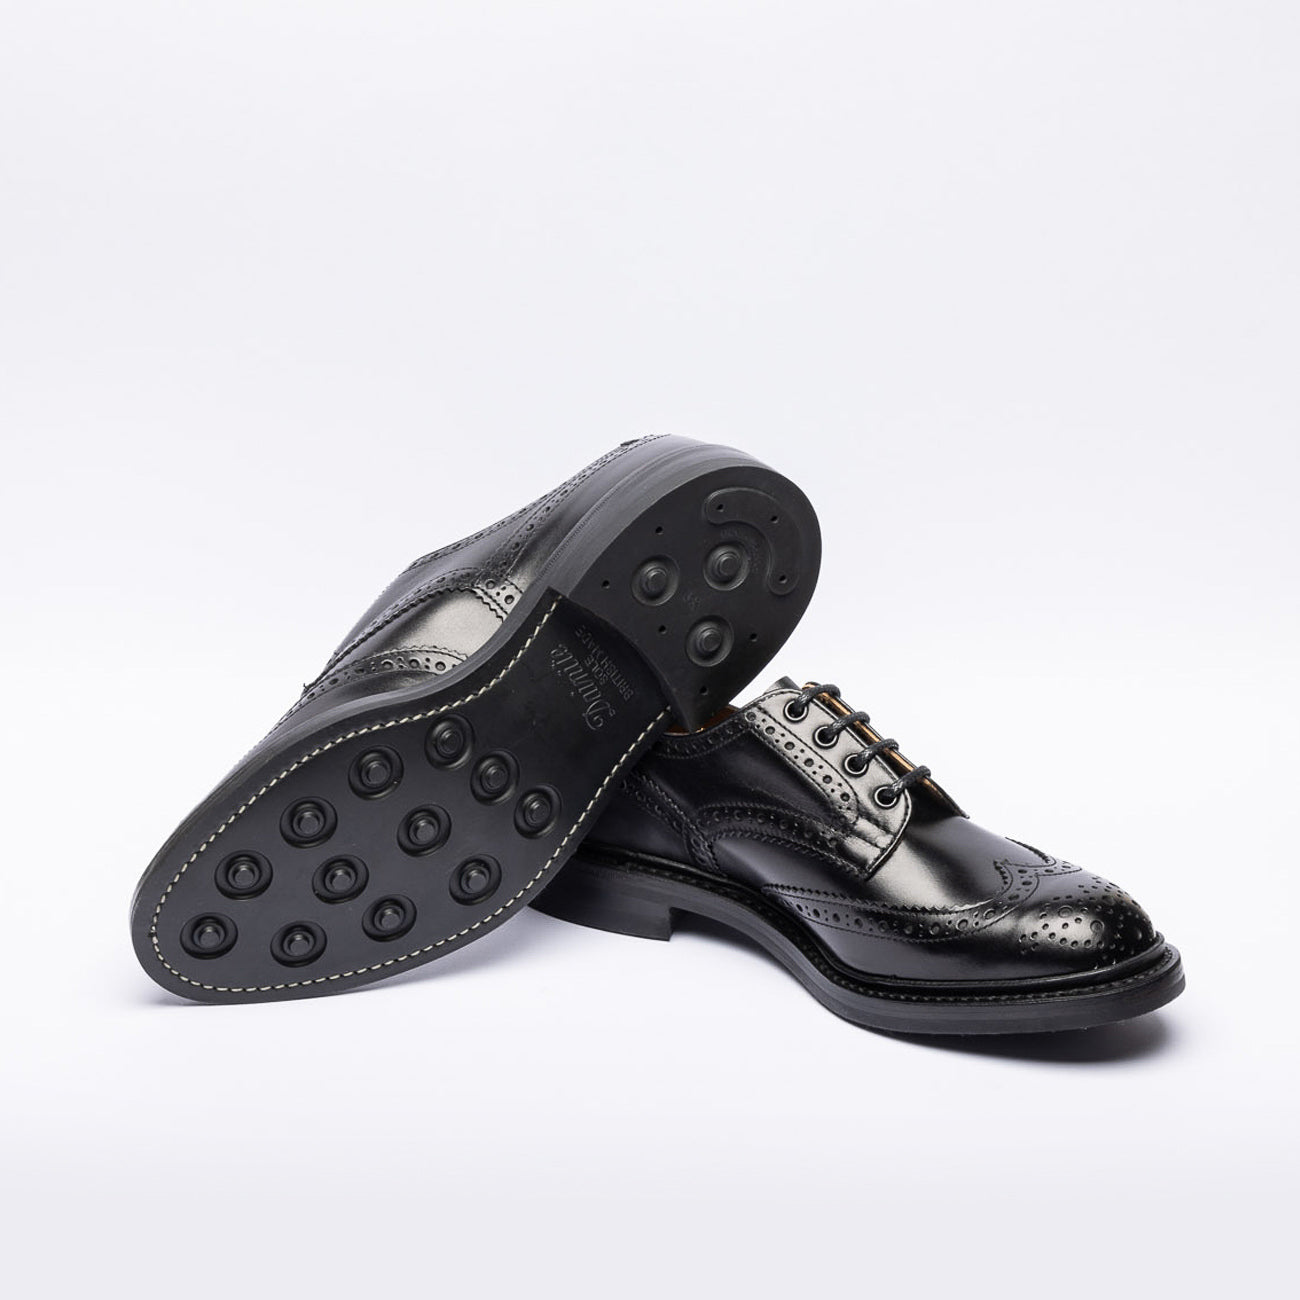 Tricker's Bourton derby lace-up in black leather (Dainite sole)